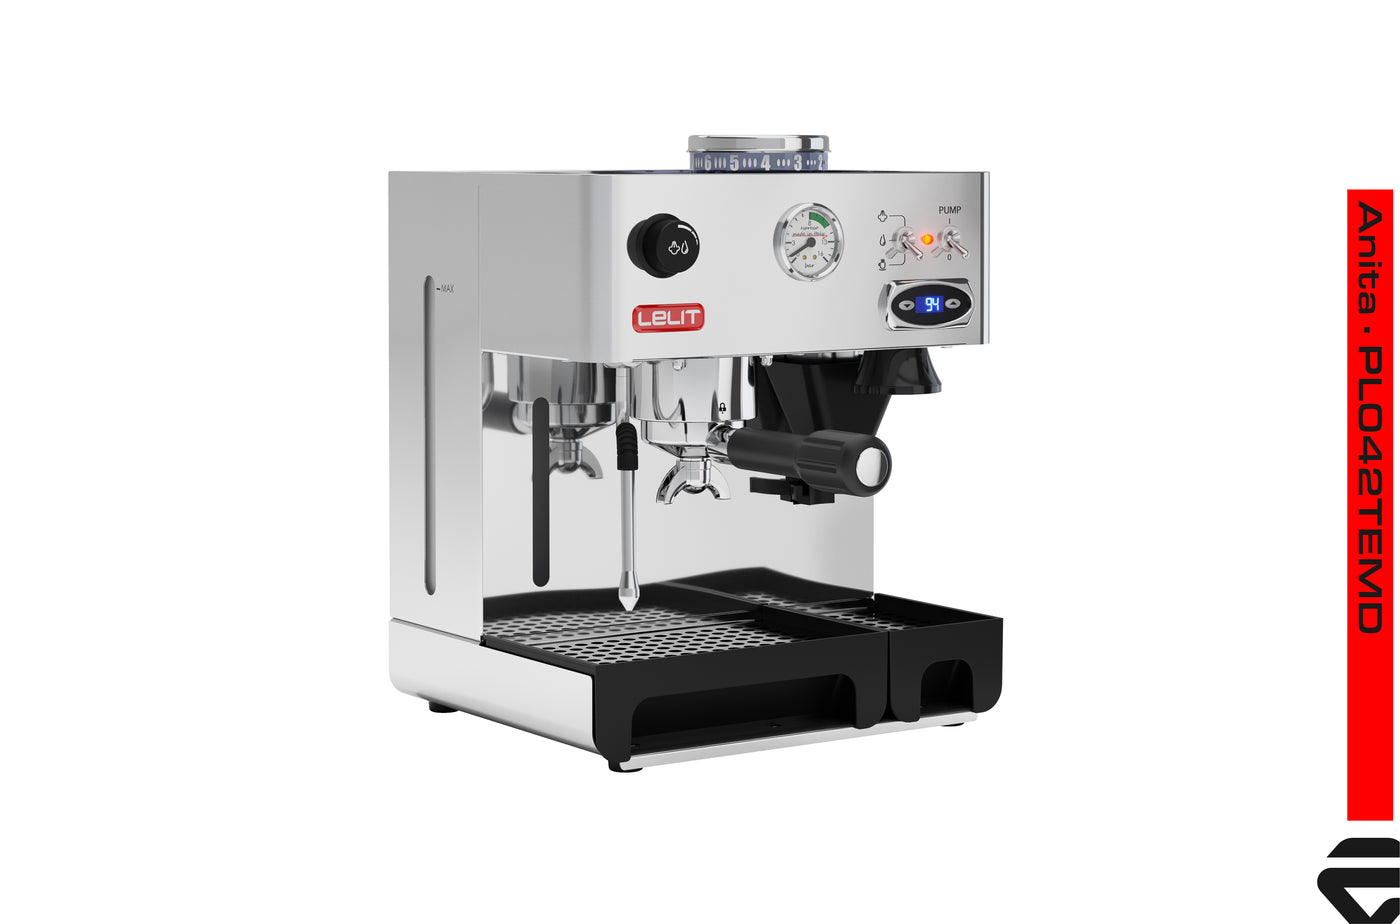 Lelit Anita Espresso Machine with Grinder